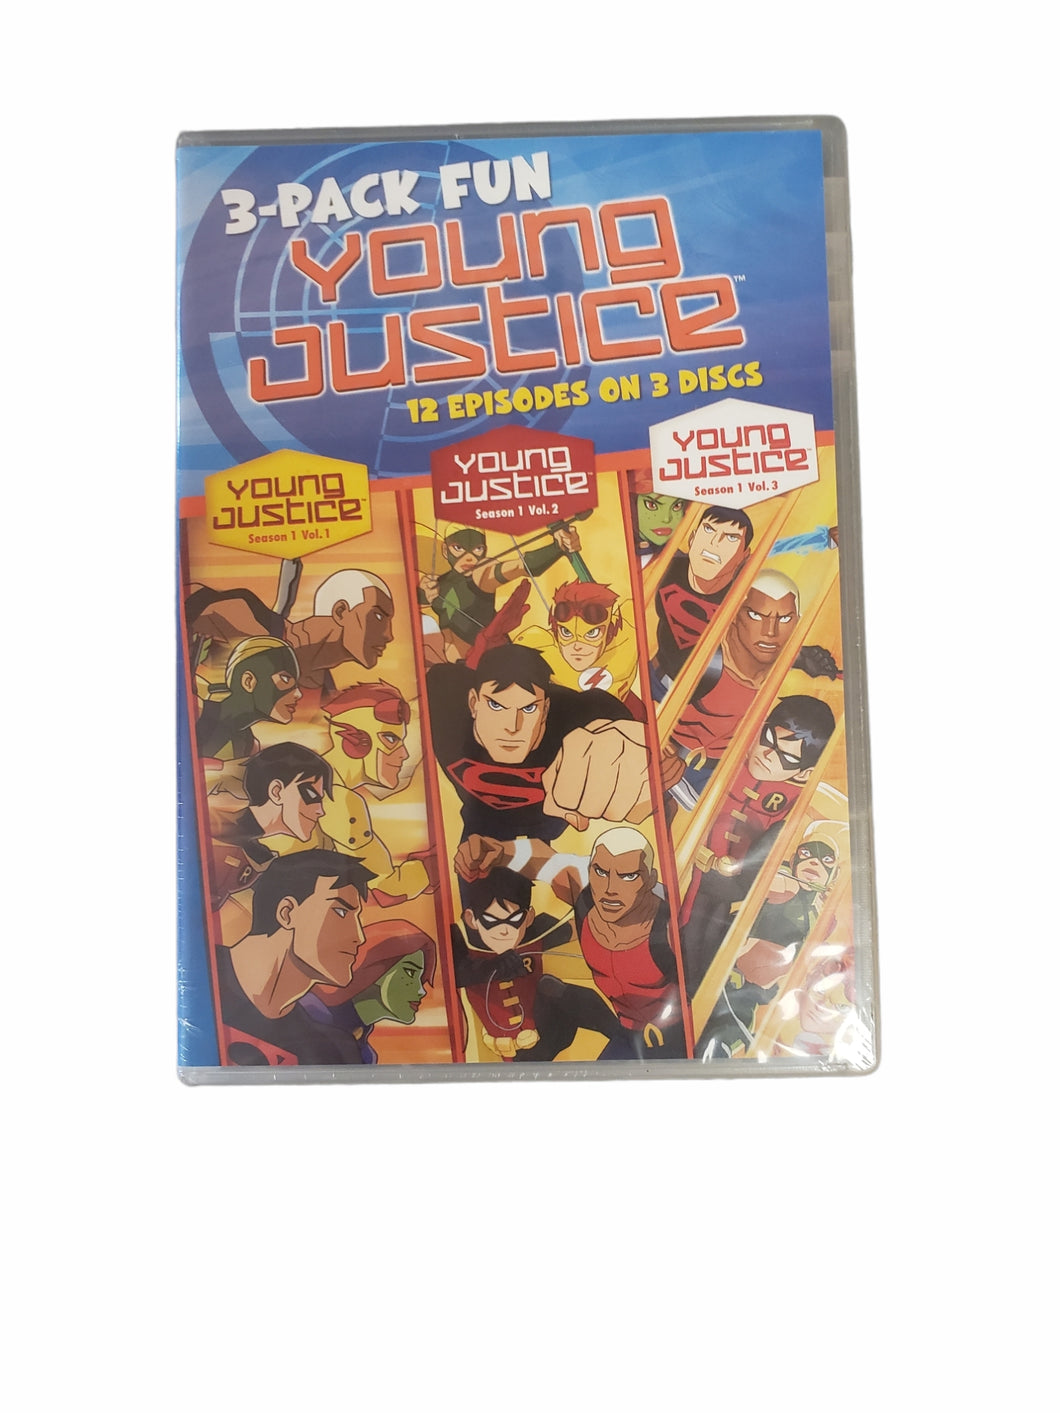 Young Justice 3-Pack Fun DVD Set 12 Episodes - FreemanLiquidators - [product_description]